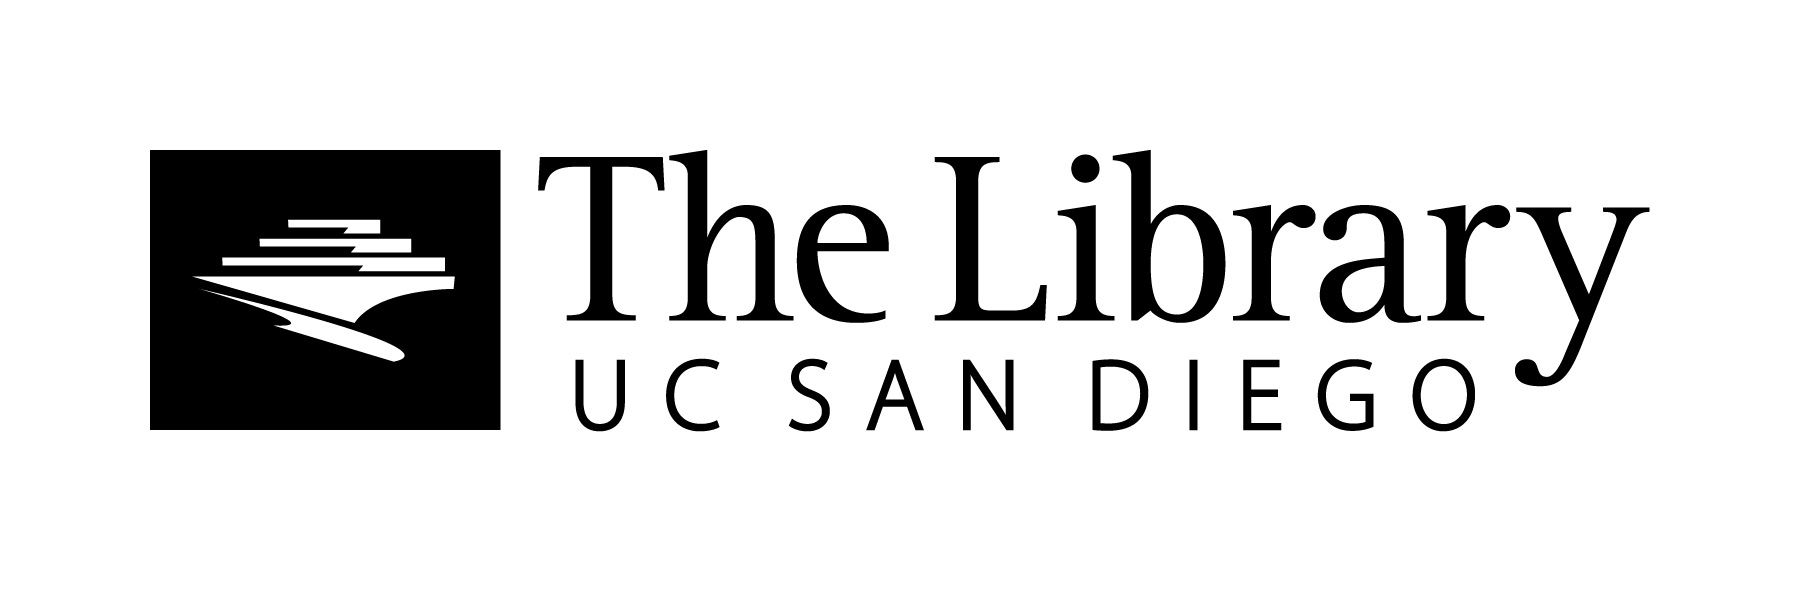 University of California, San Diego Library